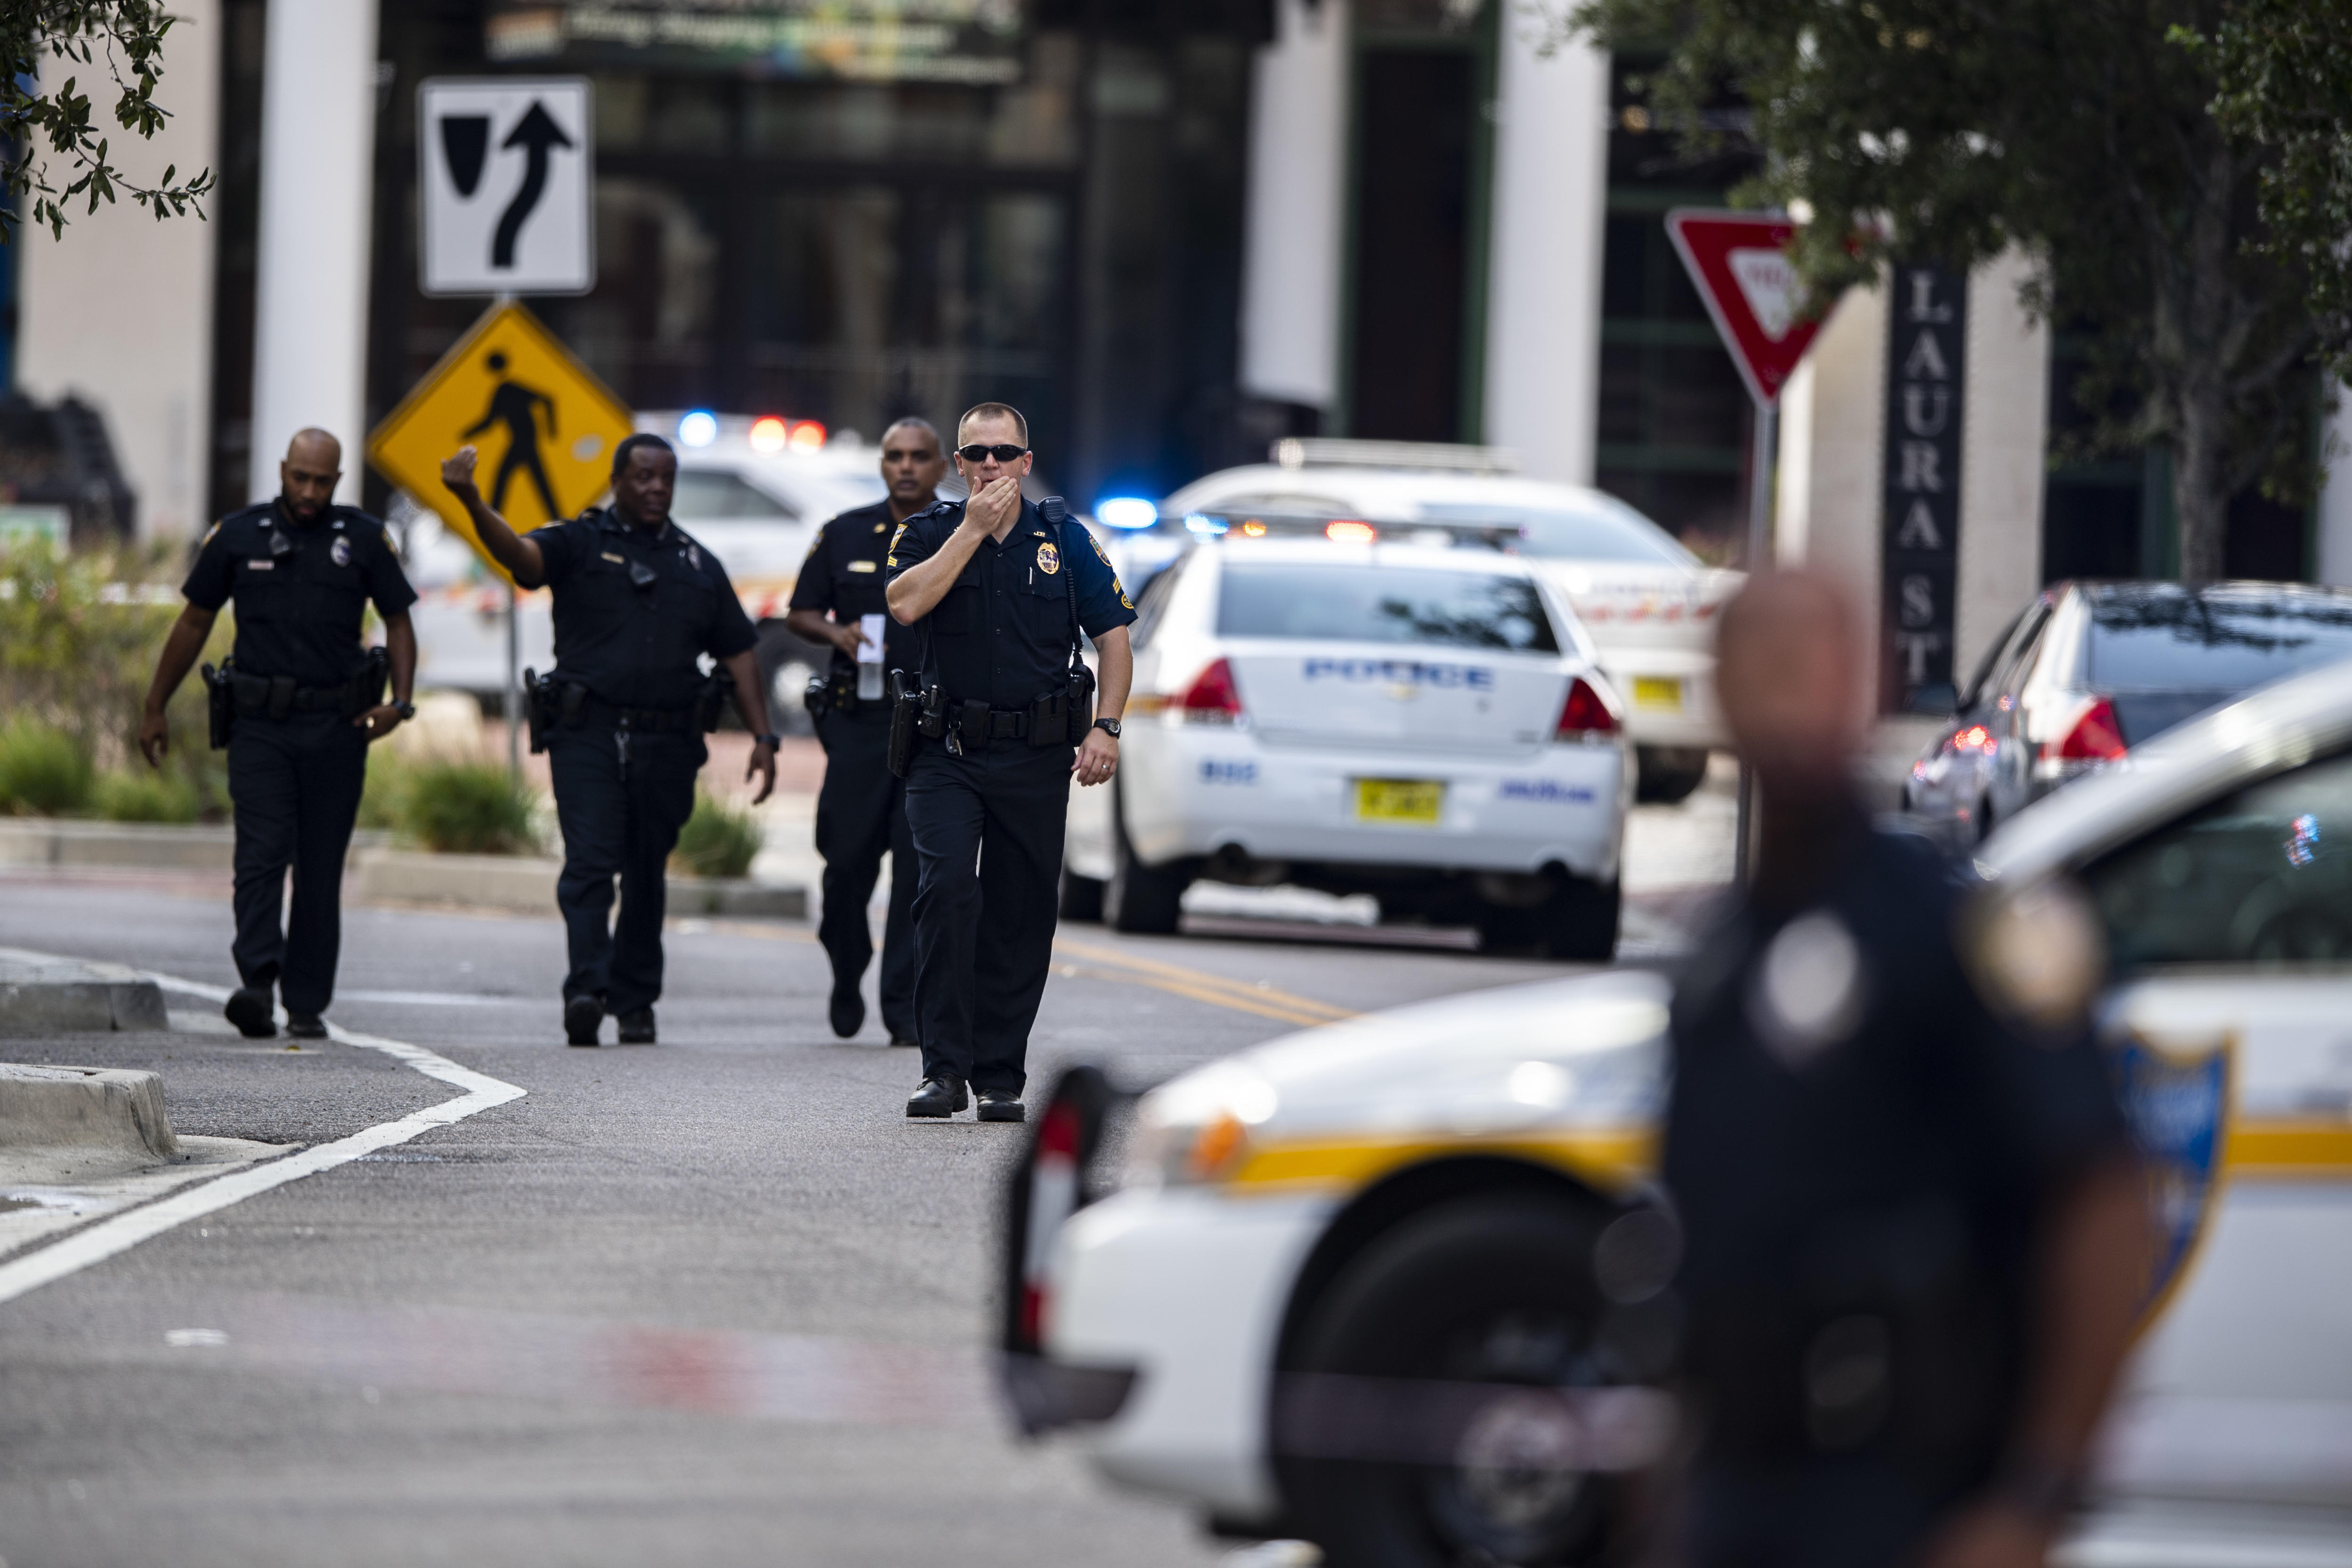 Jacksonville mass shooting Suspect David Katz among 3 killed today at